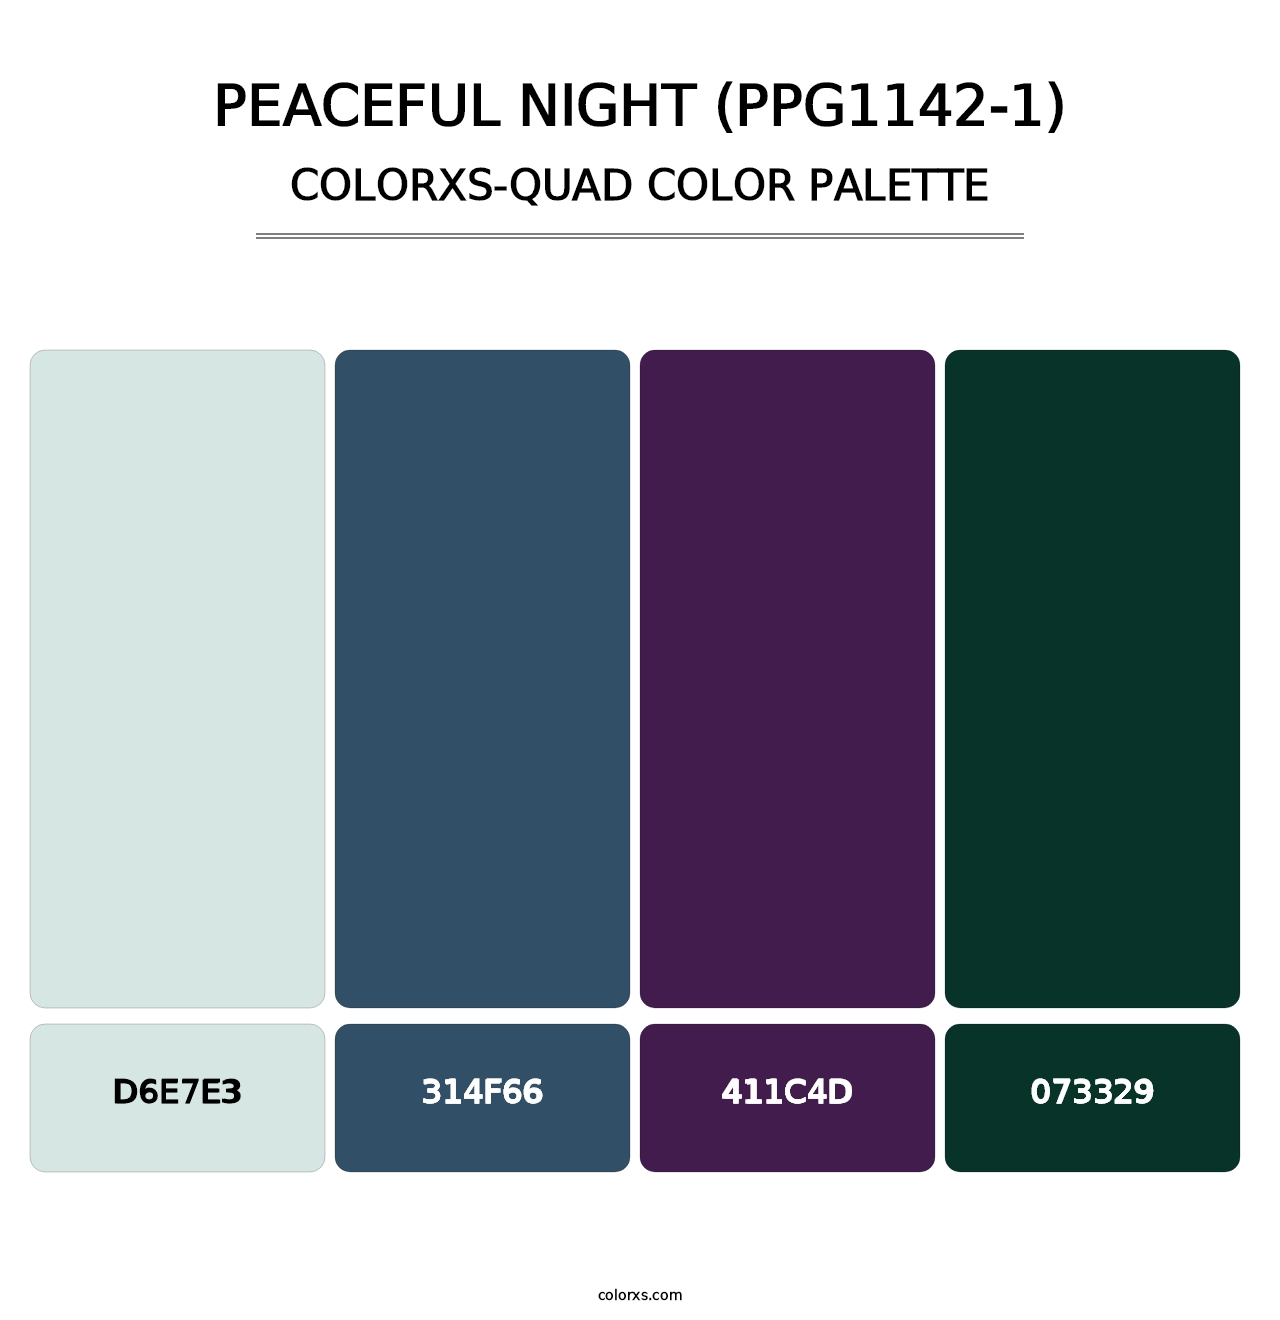 Peaceful Night (PPG1142-1) - Colorxs Quad Palette